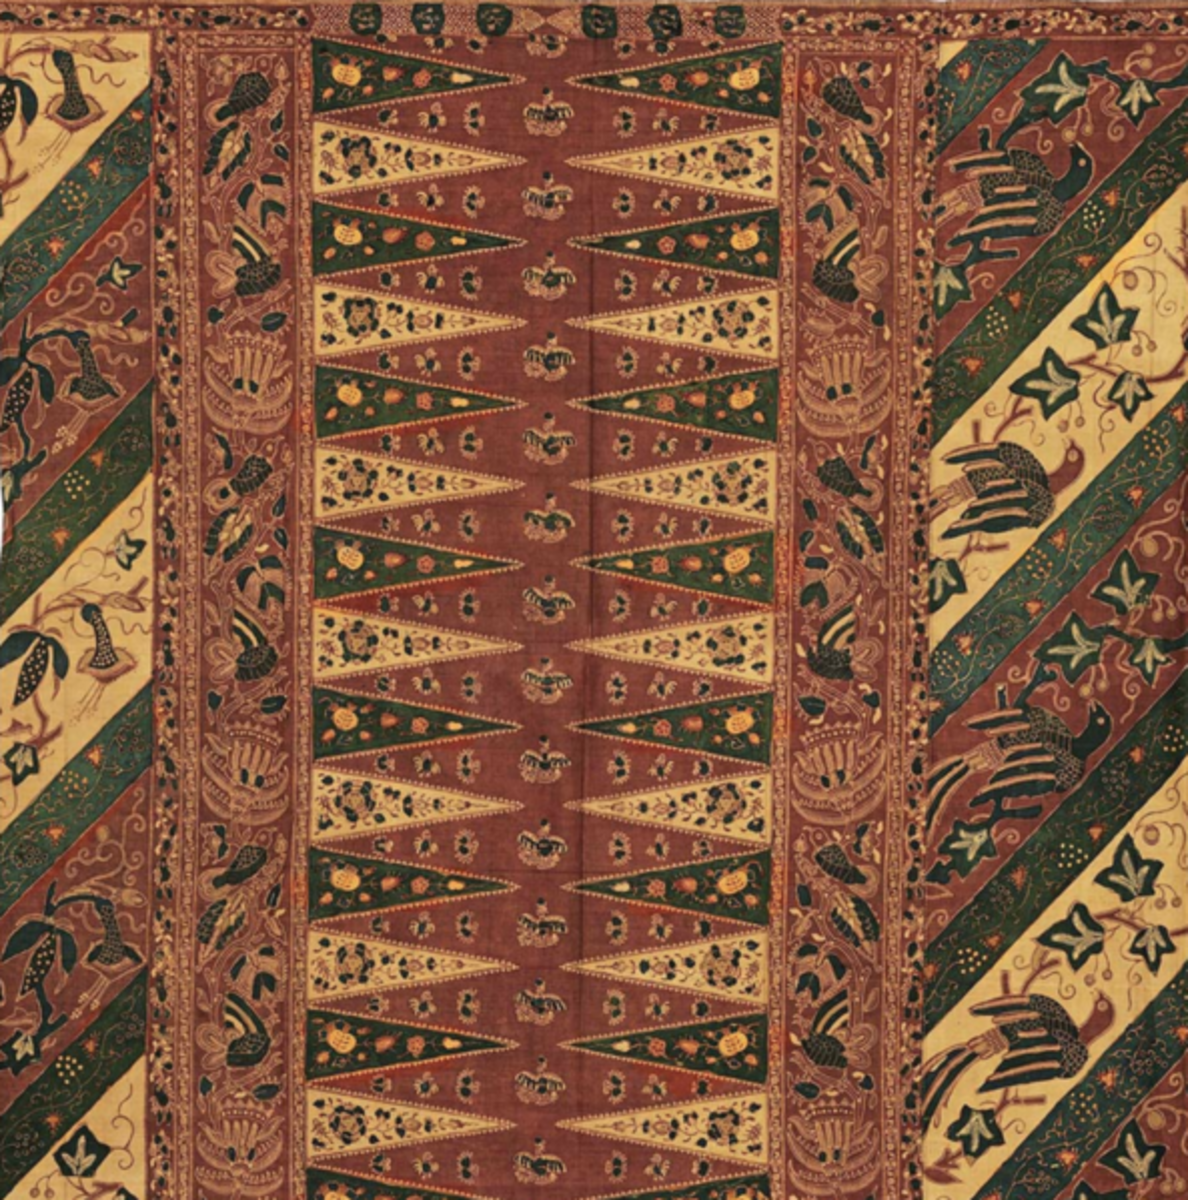 Javanese batik, probably from the Semarang workshop of Carolina Josephina von Franquimont (1817-1867).